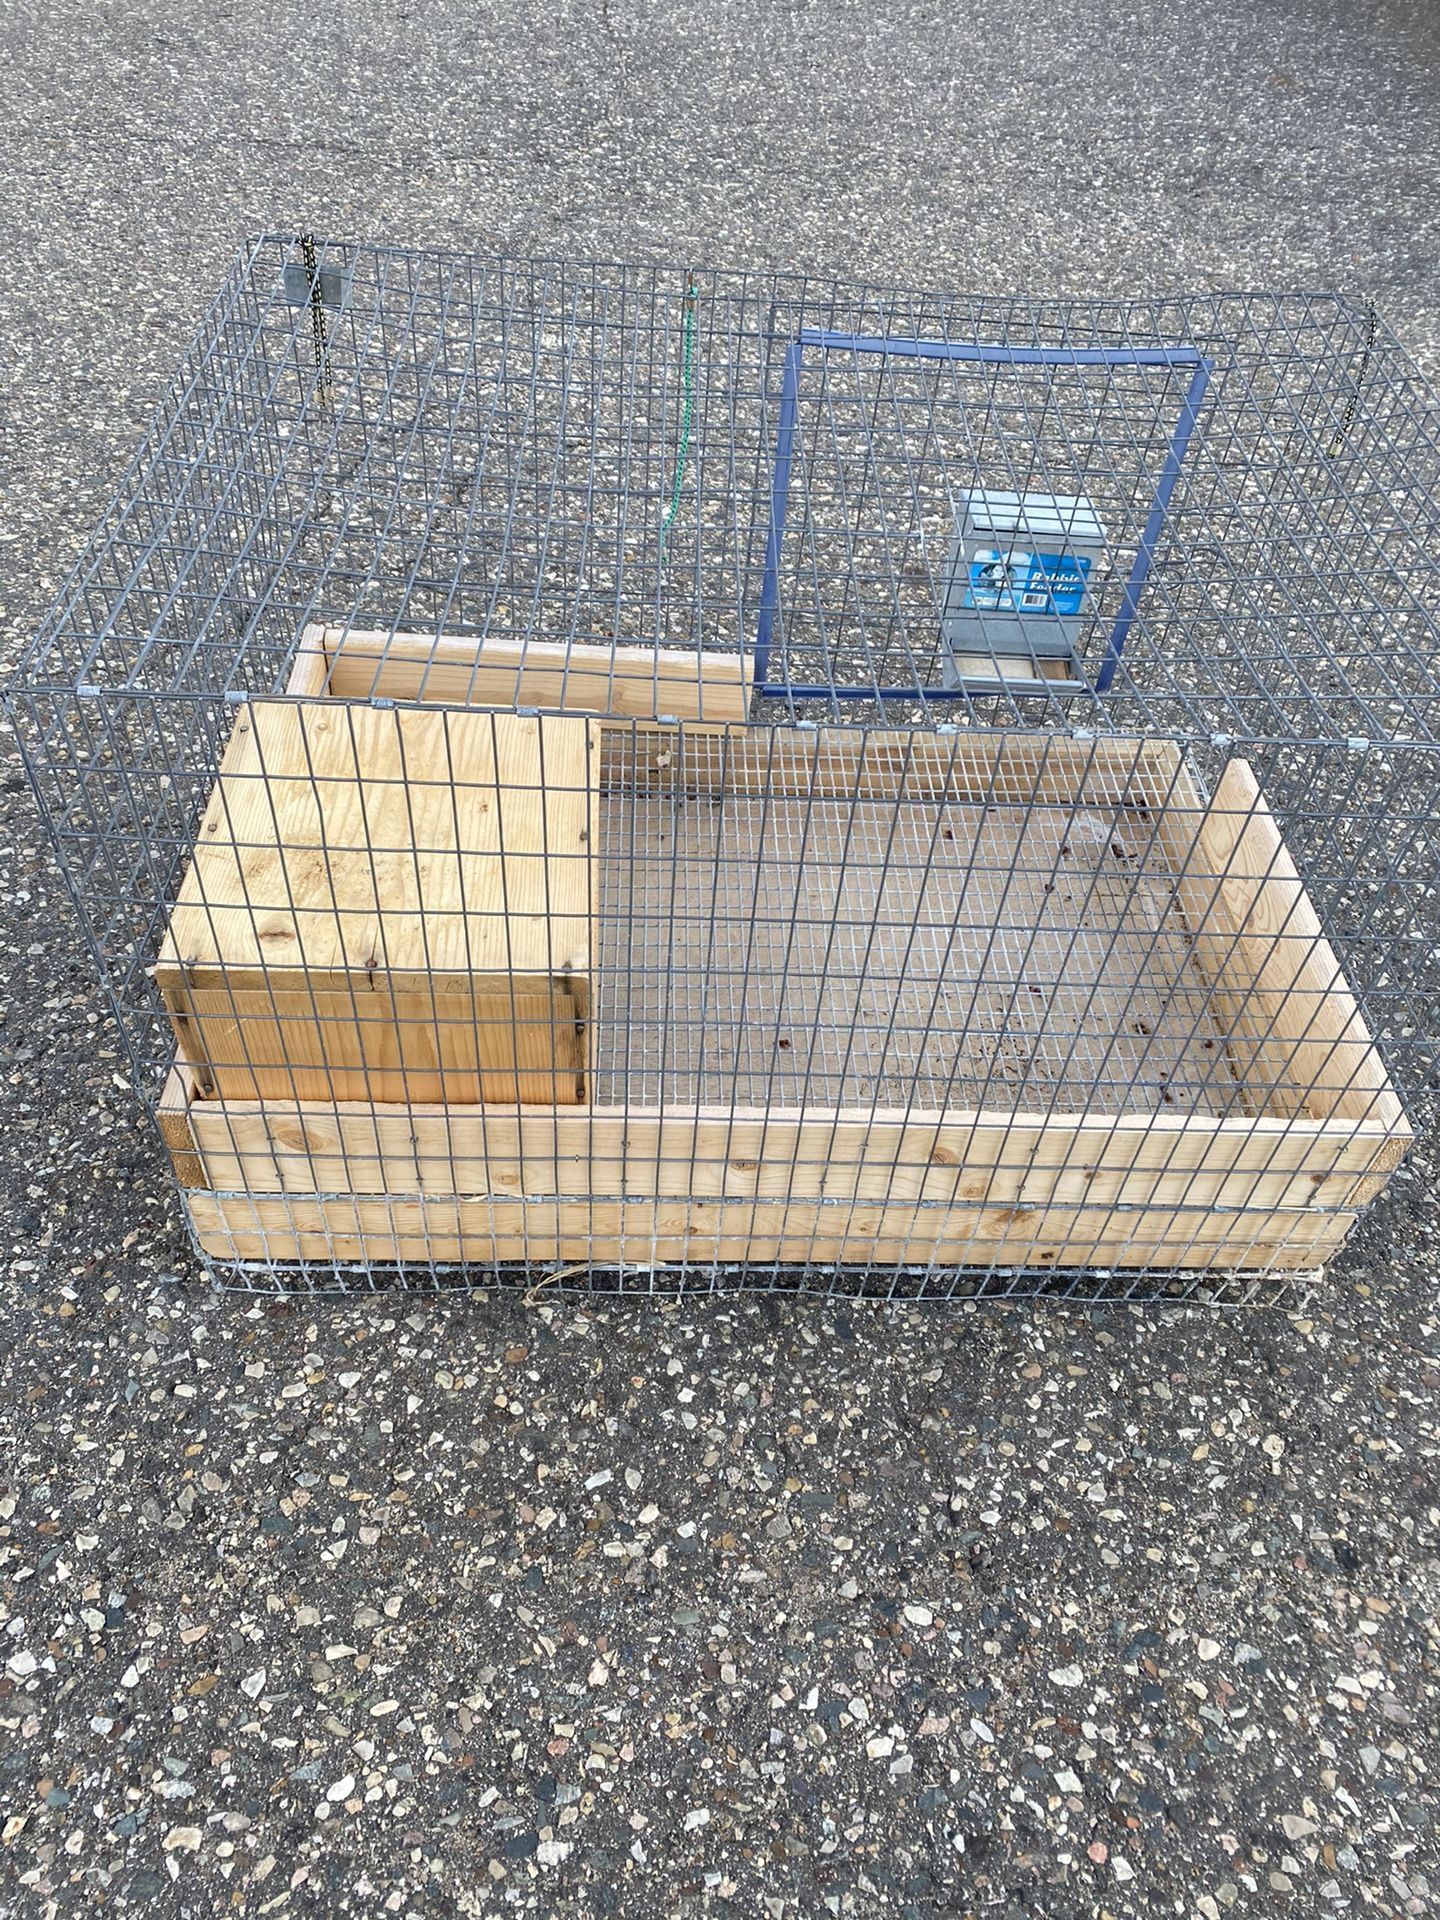 Rabbit Cage 